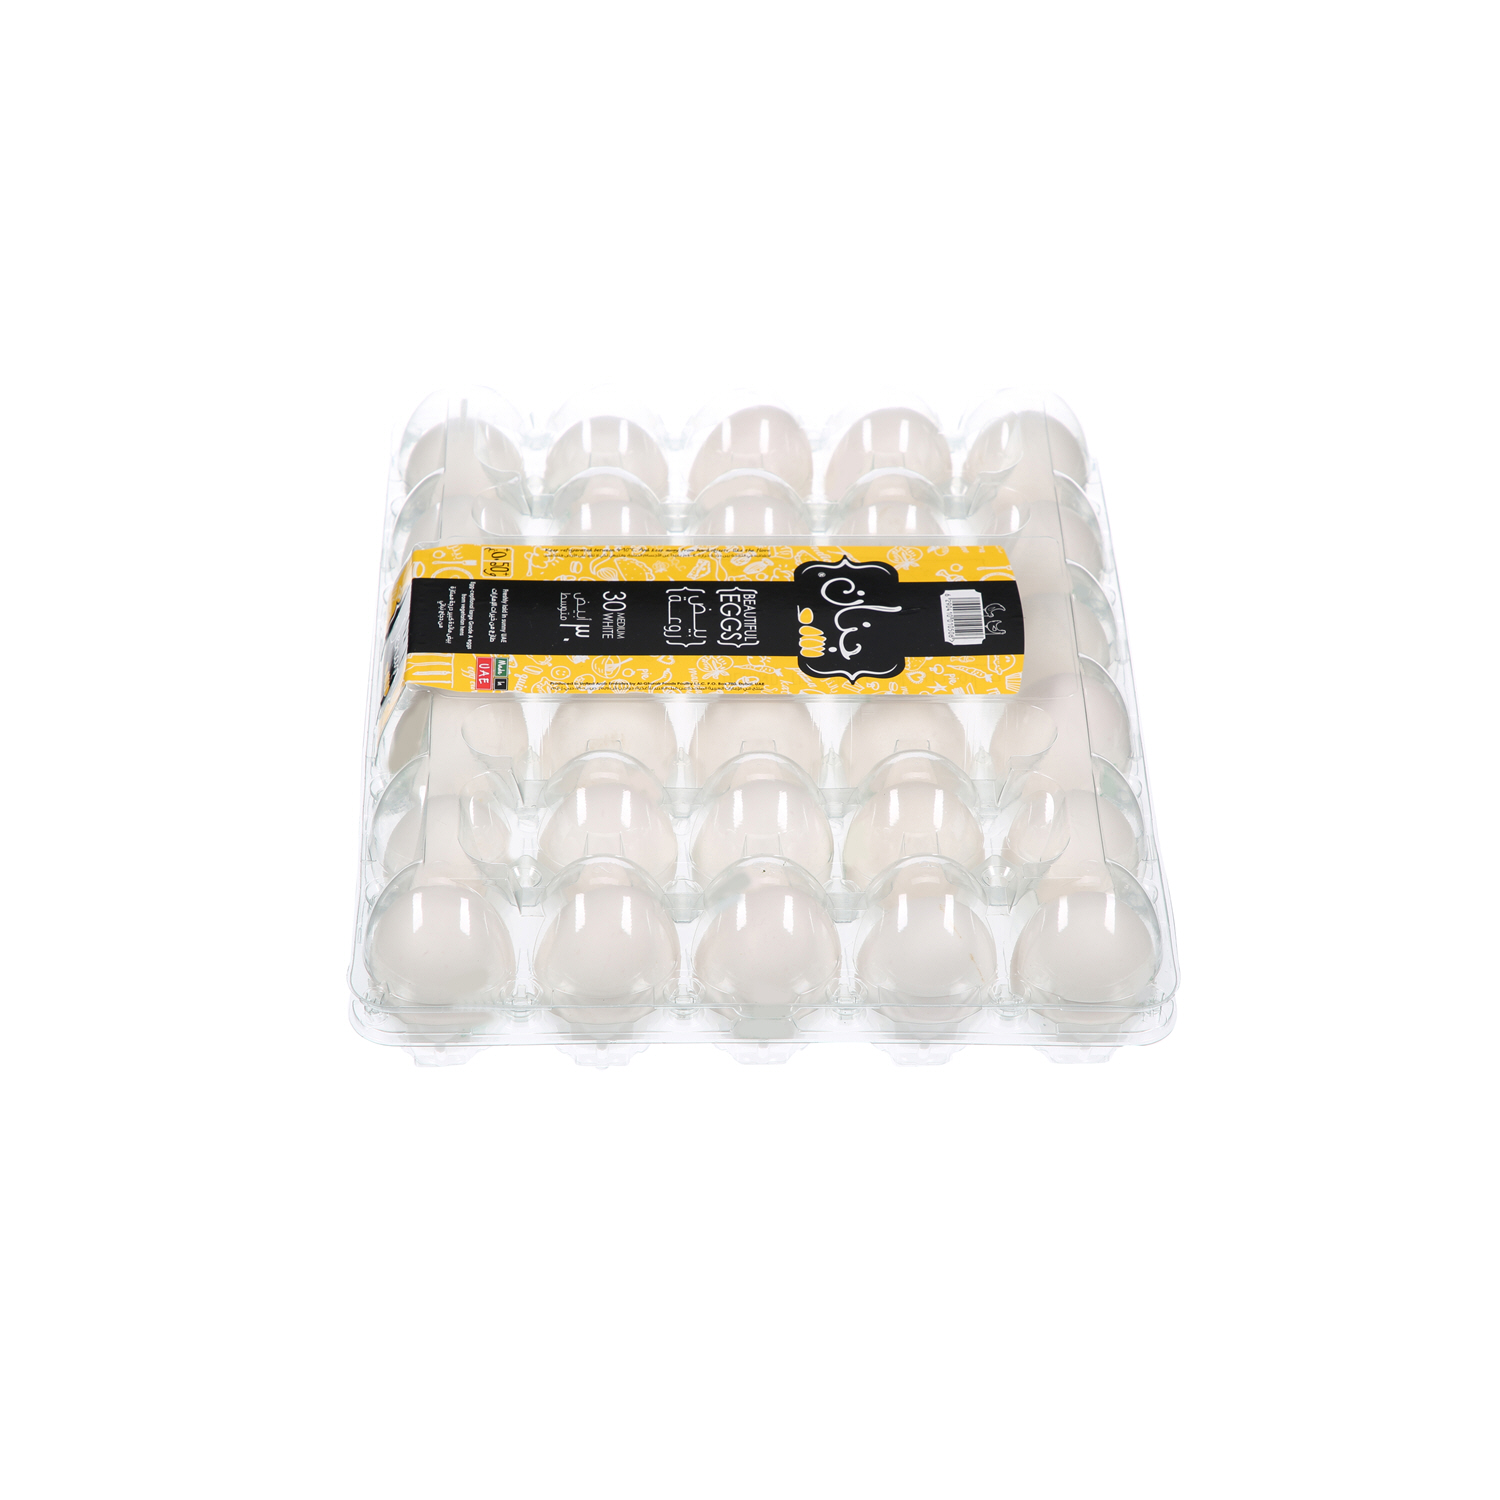 Jenan White Eggs Medium 30 Pack